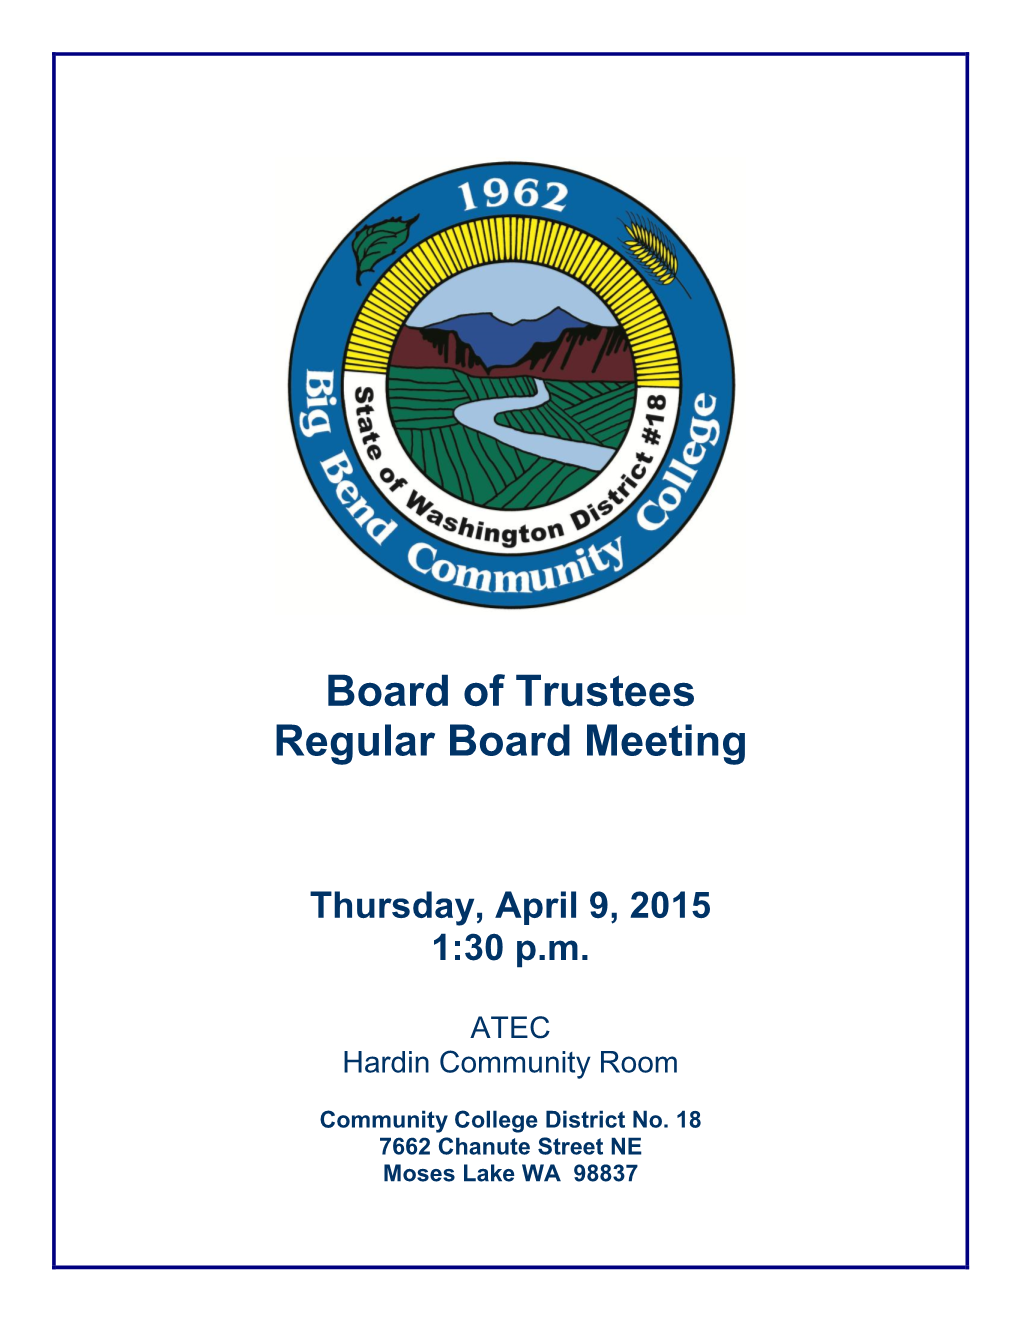 BIG BEND COMMUNITY COLLEGE 7662 Chanute Street Moses Lake, Washington 98837 Regular Board Meeting Agenda Thursday April 9, 2015, 1:30 P.M